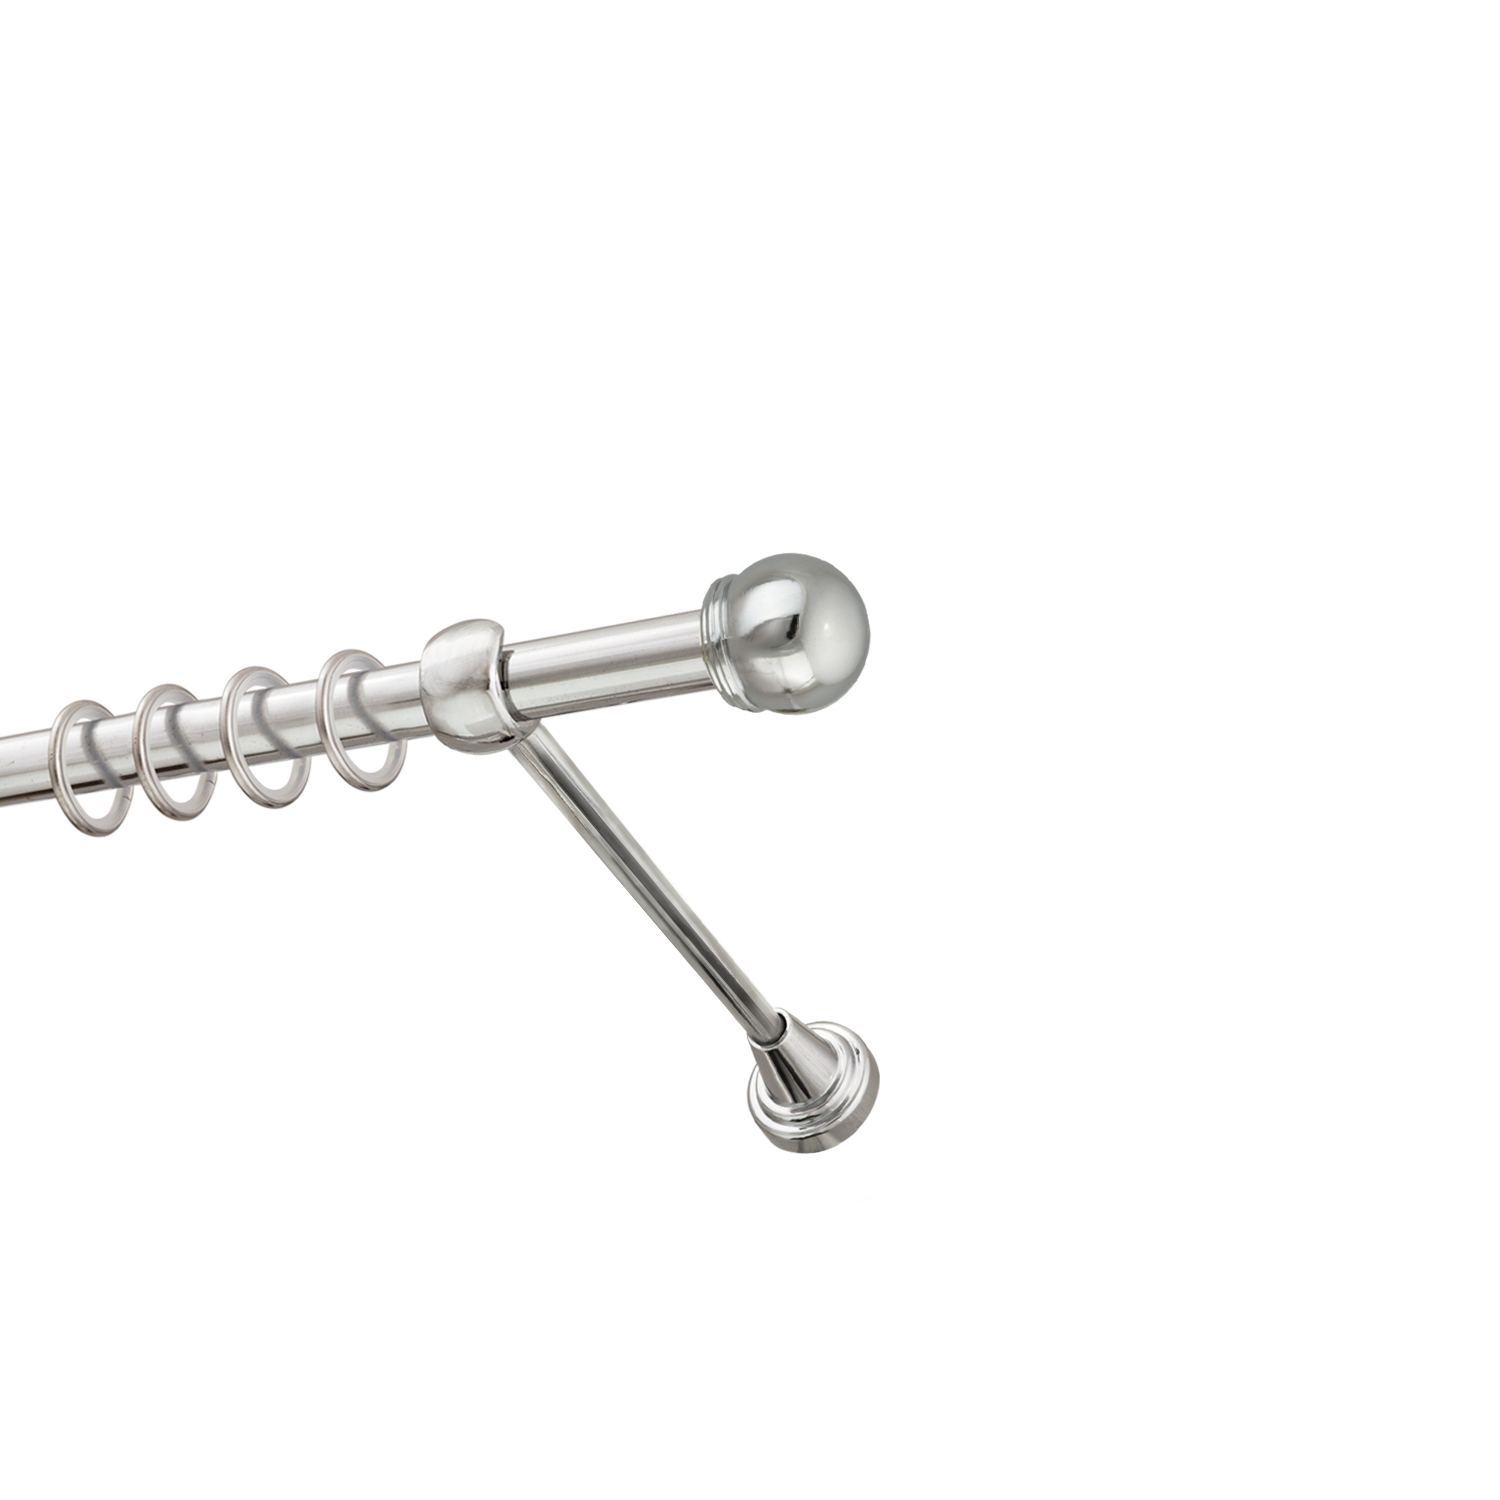 Металлический карниз для штор Вива, однорядный 16 мм, серебро, гладкая штанга, длина 160 см - фото Wikidecor.ru